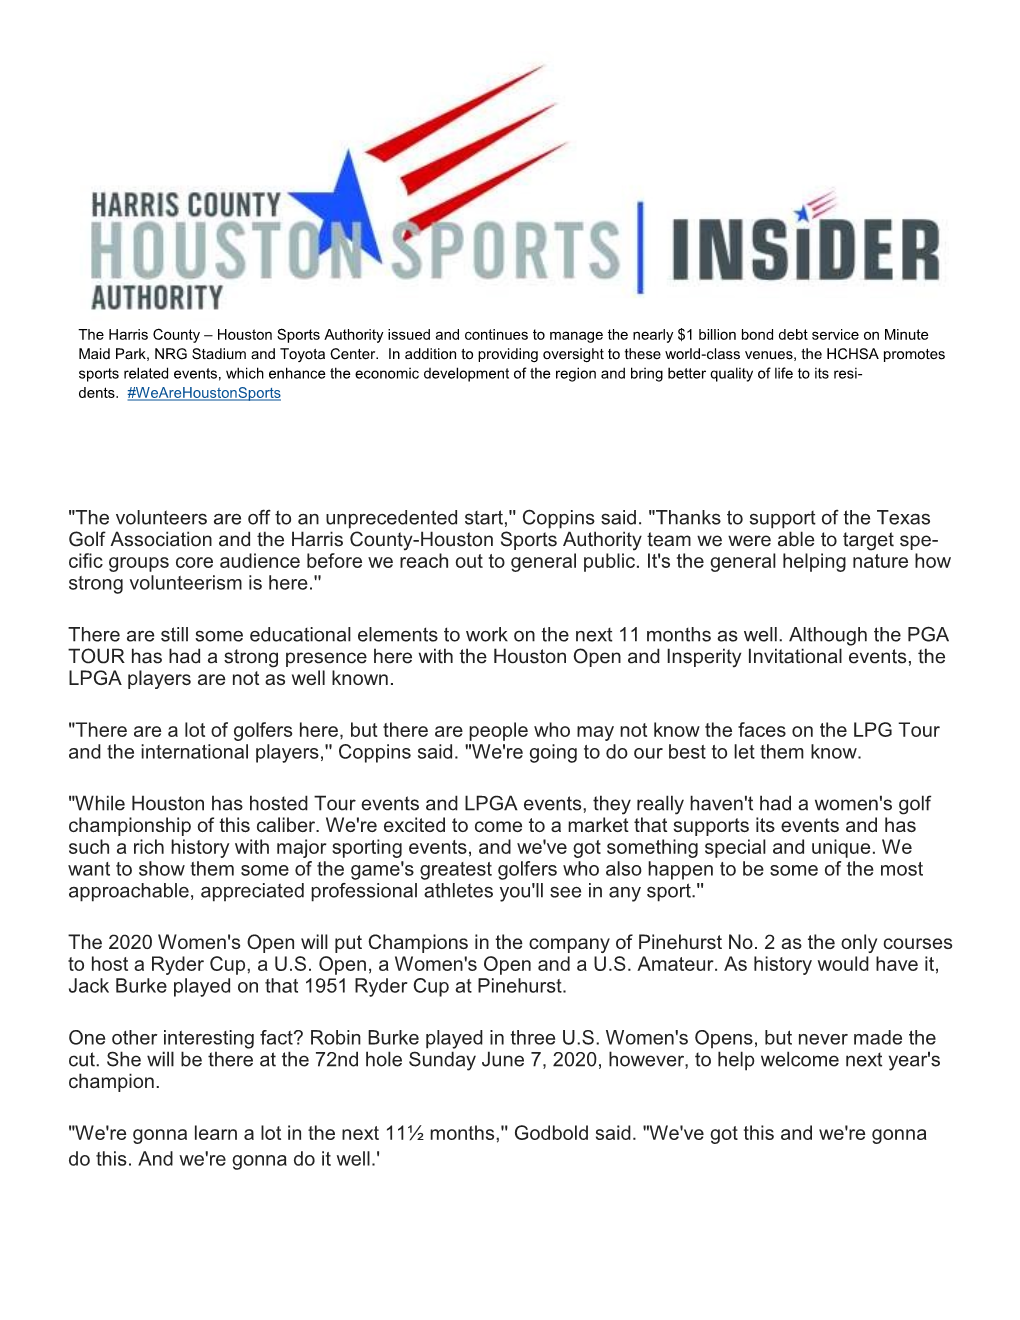 Harris County Houston Sports Article